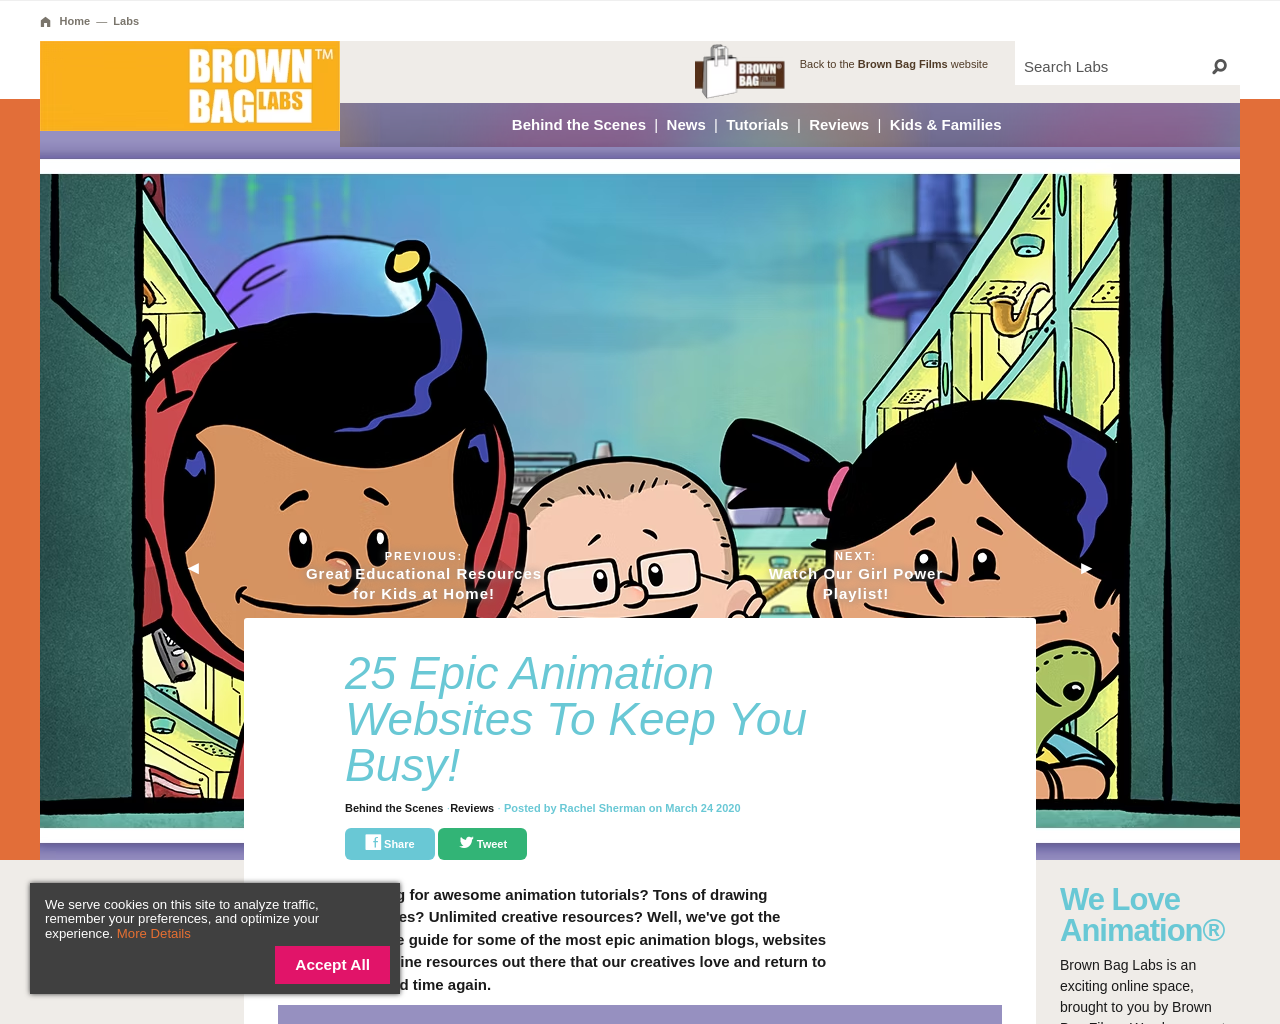 Animation websites from Brown Bag films